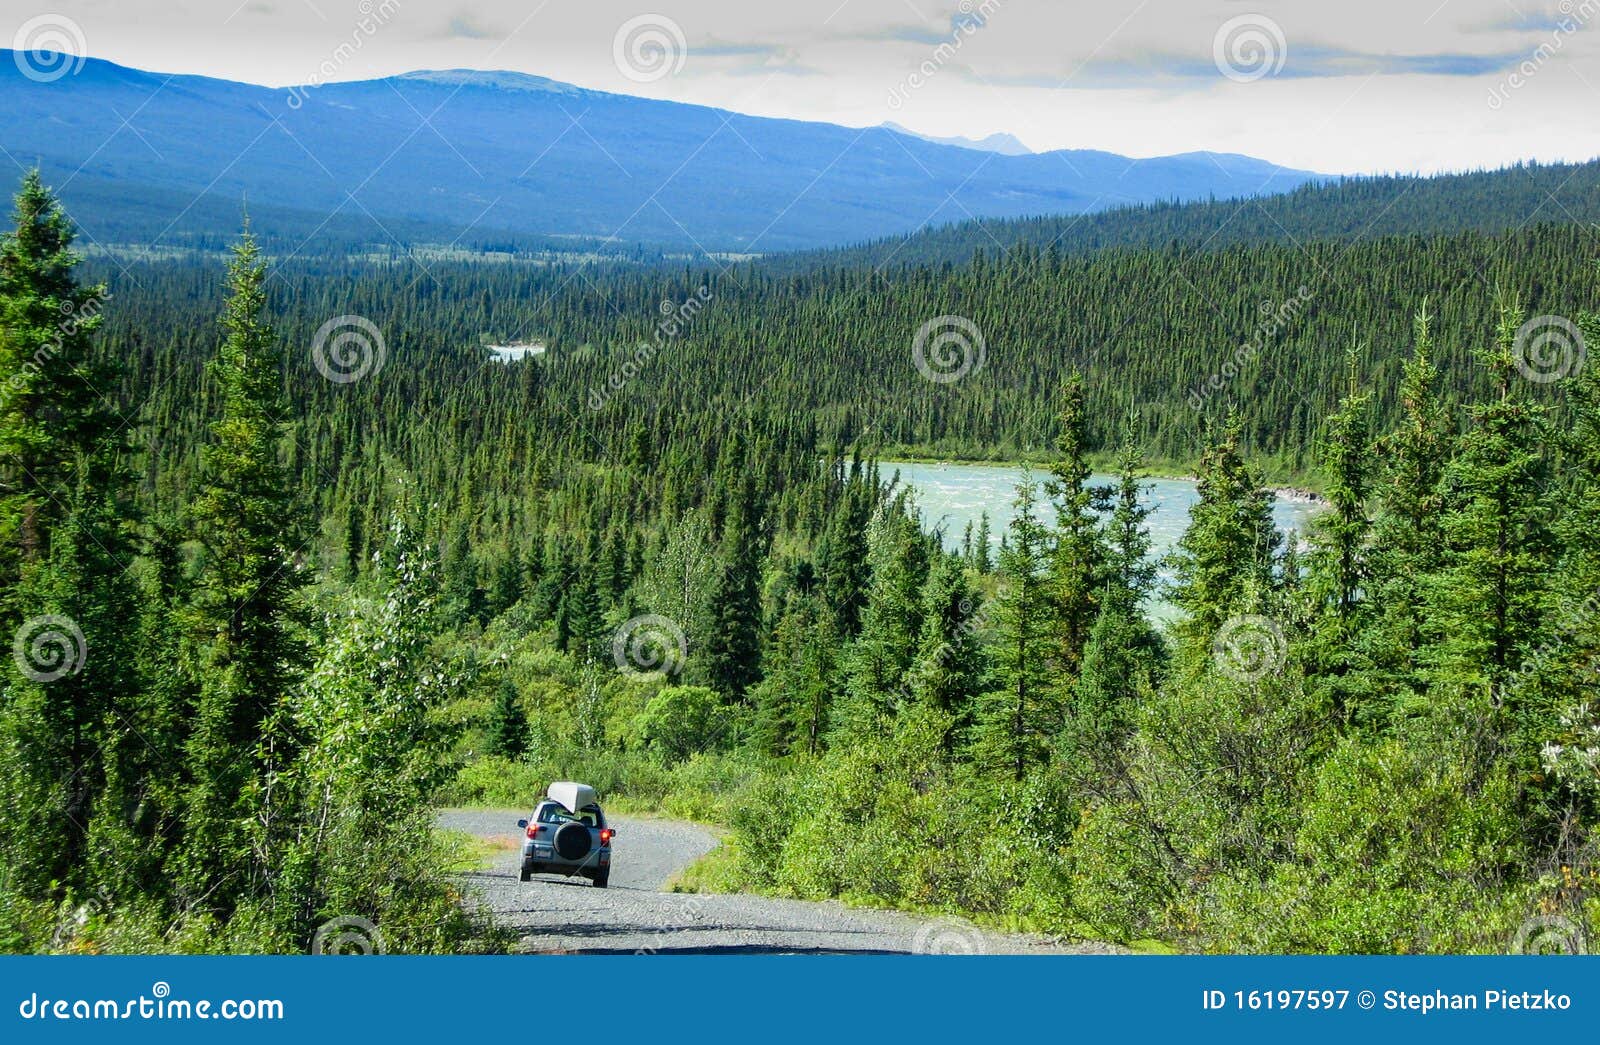 north canol road, yukon territory, canada